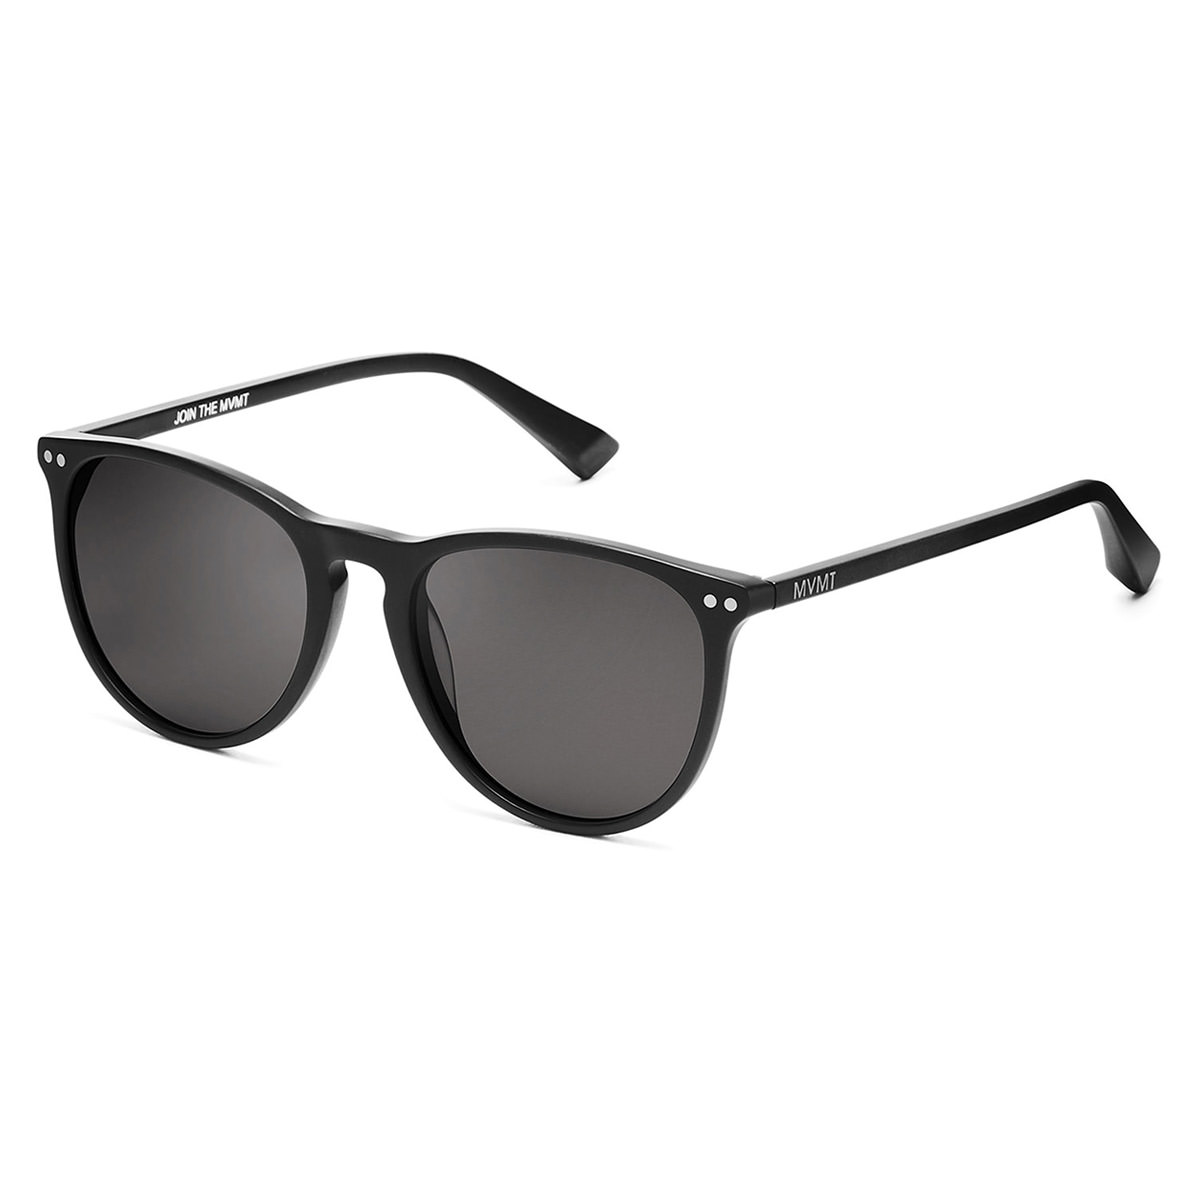 NITROGEN Sunglasses Accessories OEM# FTPSUN01 in Dorr, MI #750-10295